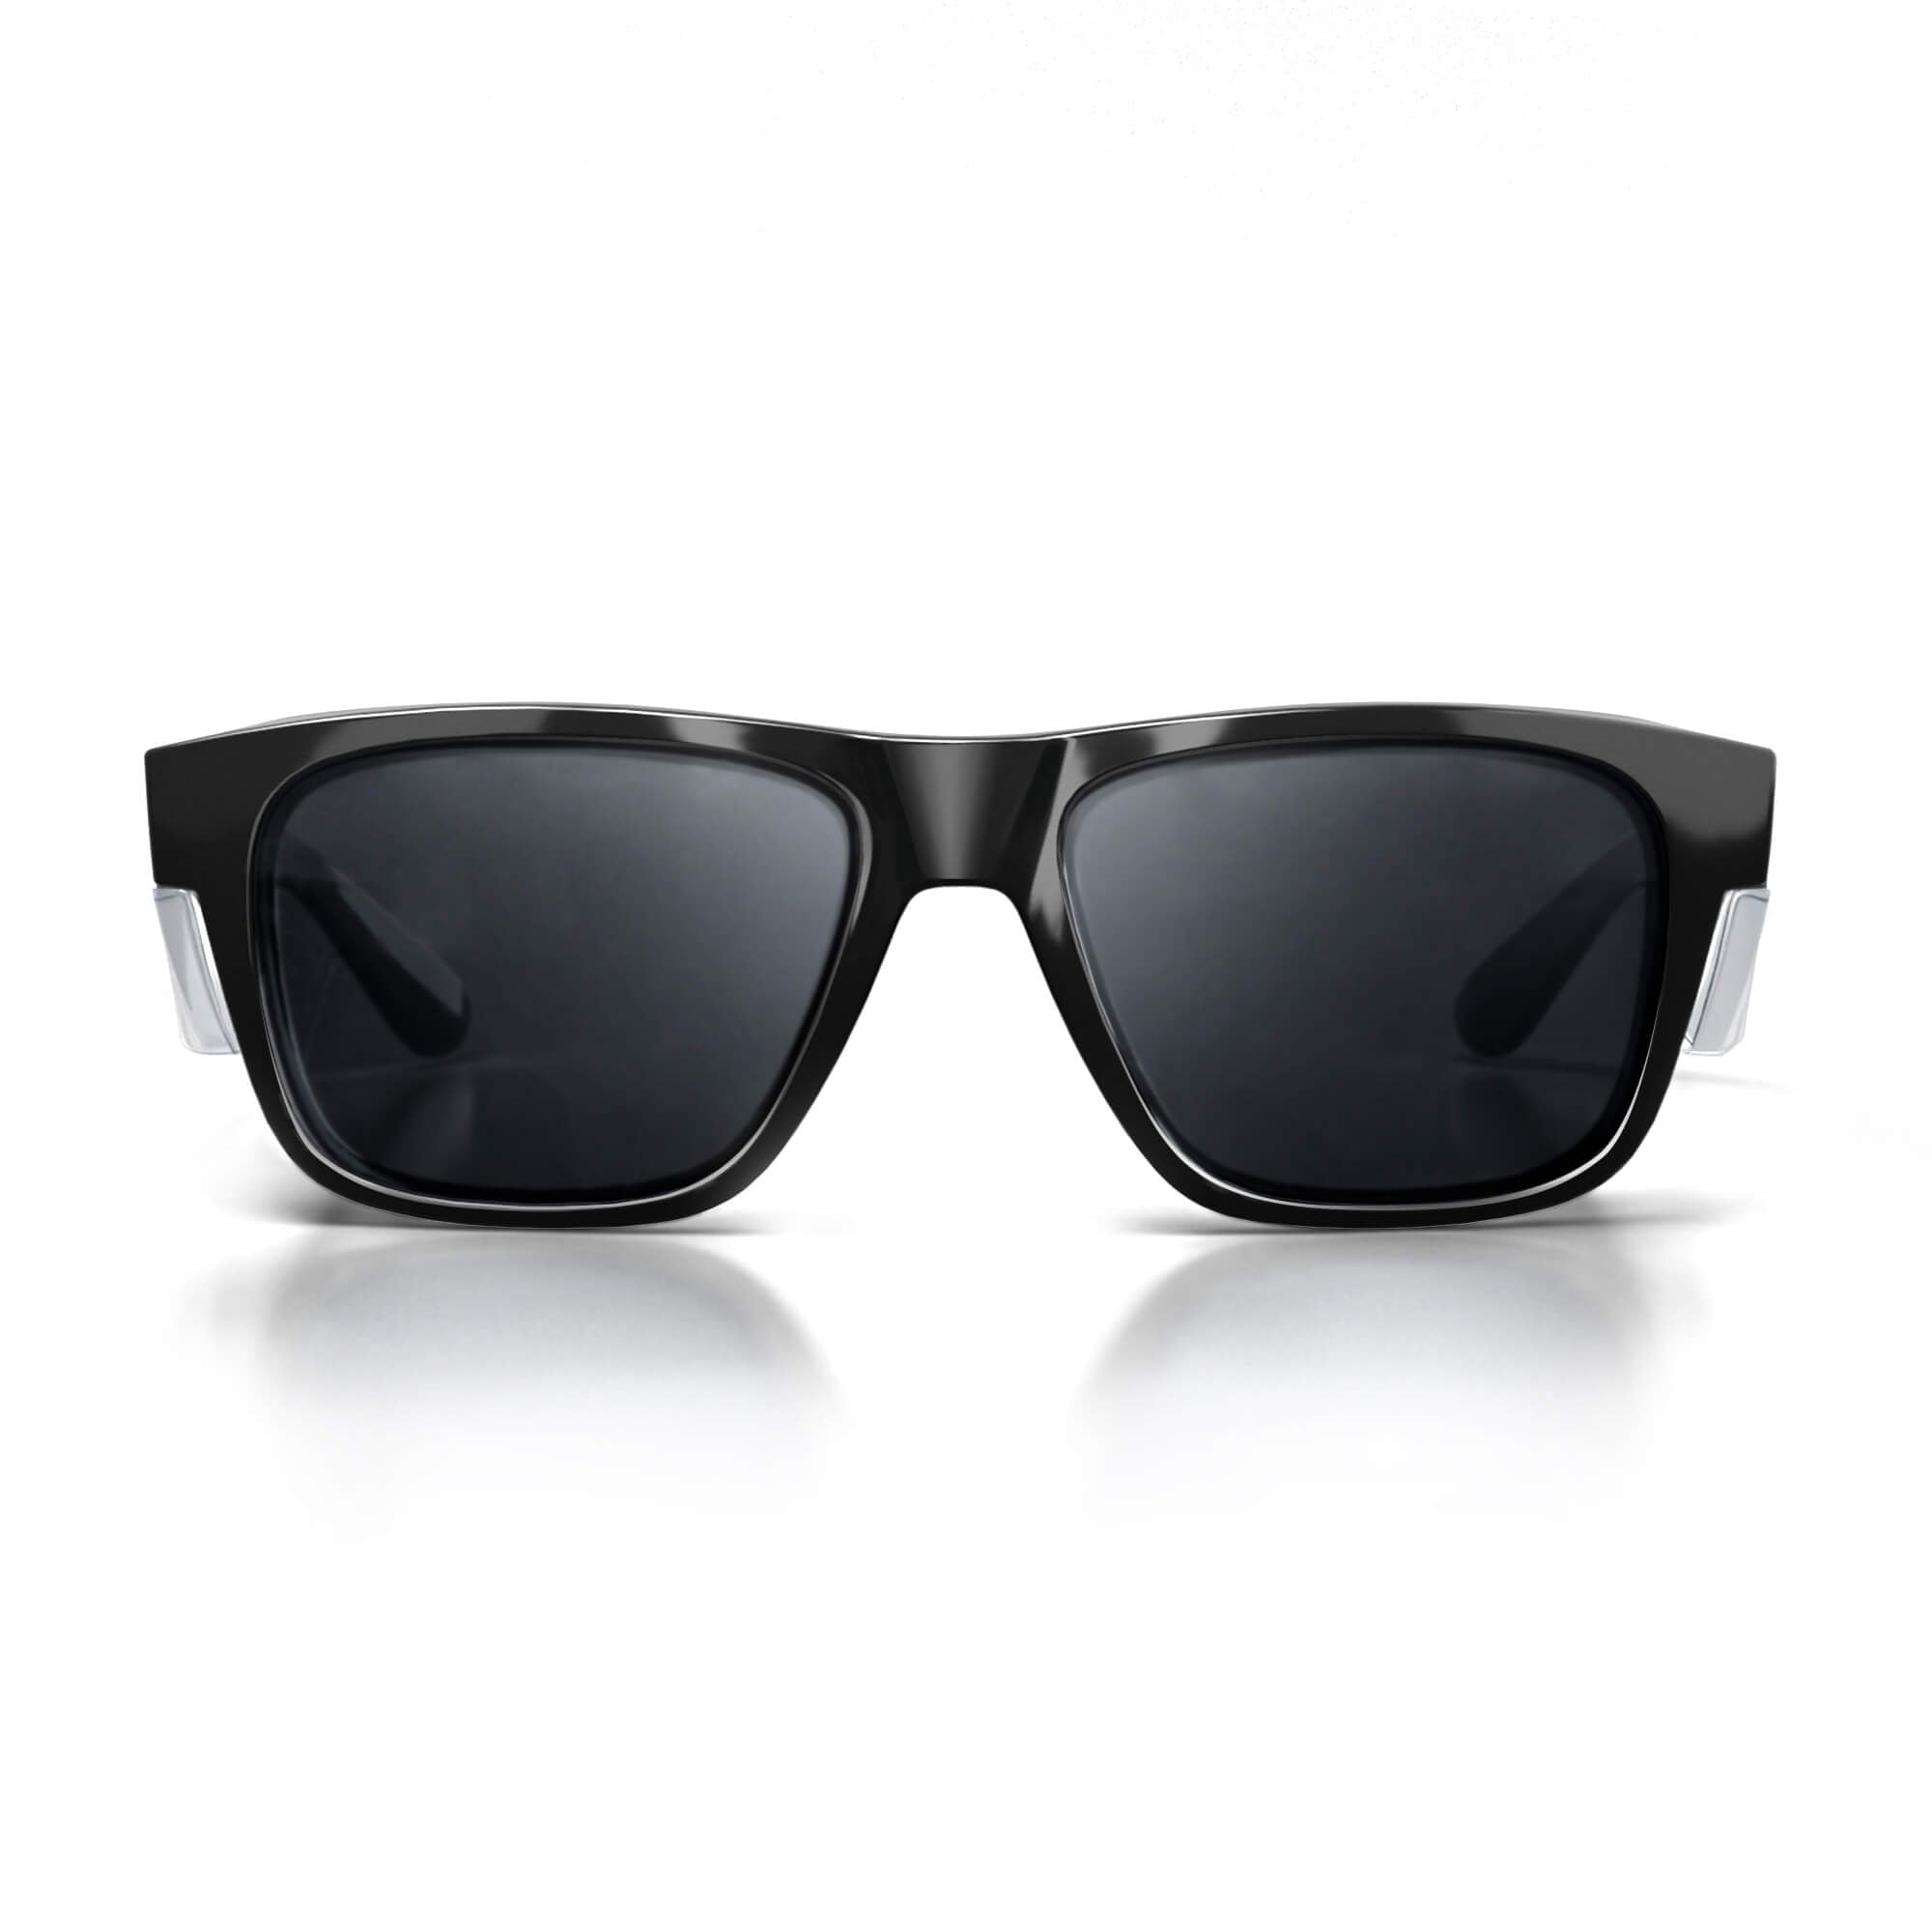 SafeStyle Fusions Black Frame/Polarised UV400 Lens glasses